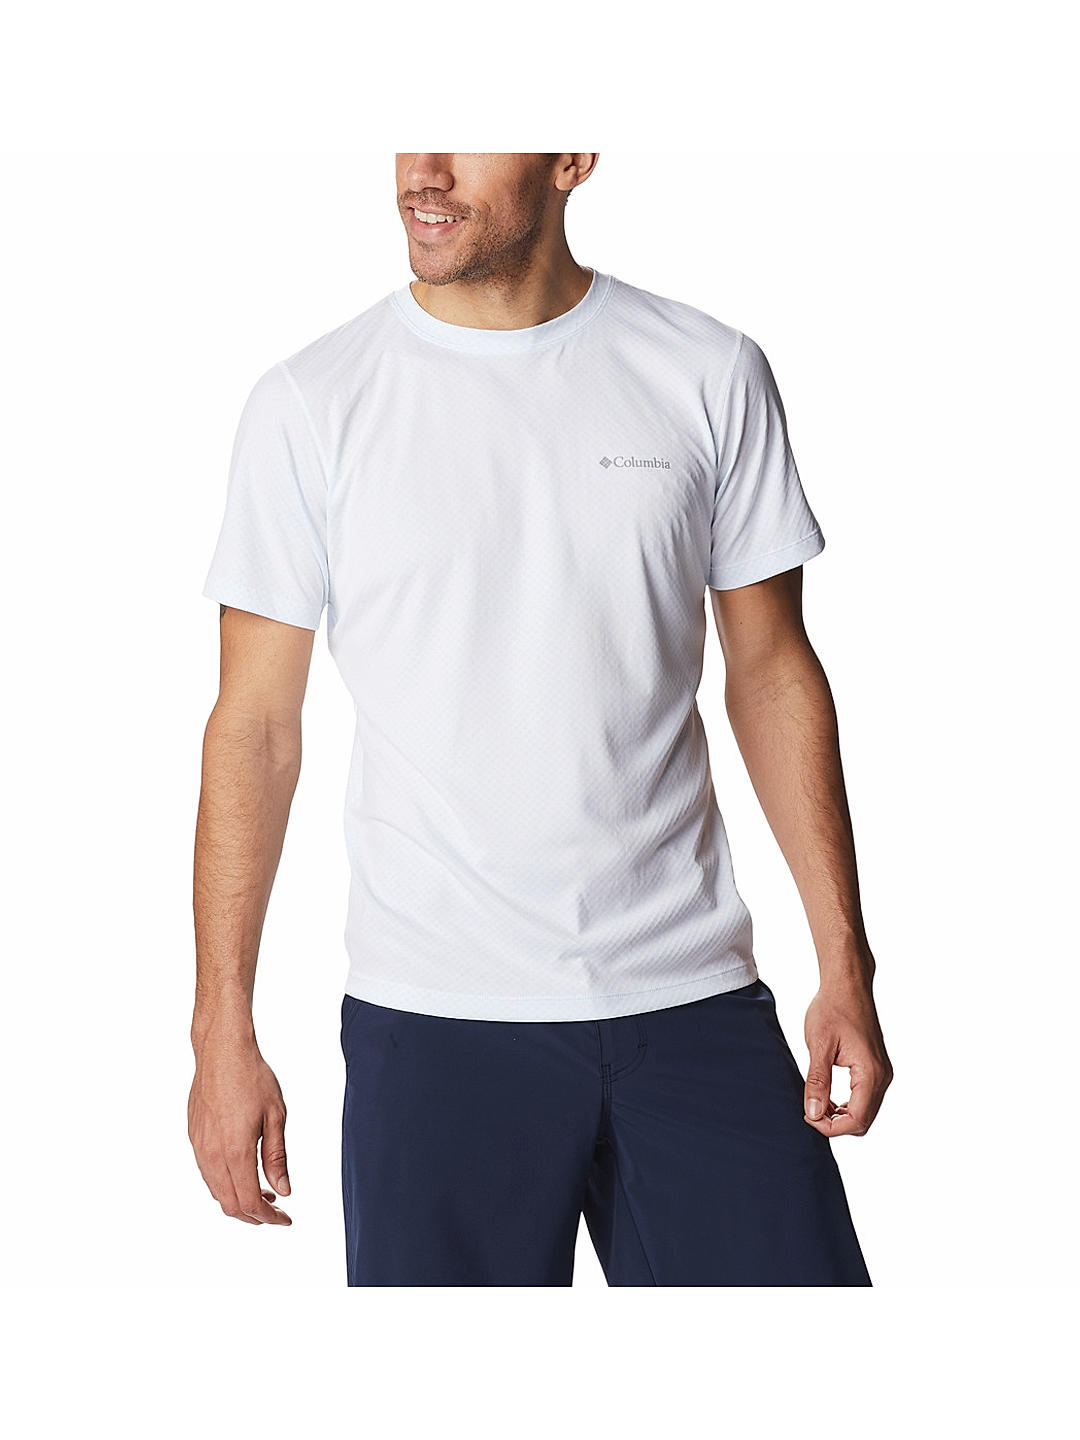 White Zero Short Sleeve Shirt for Men Online at Columbia Sportswear |